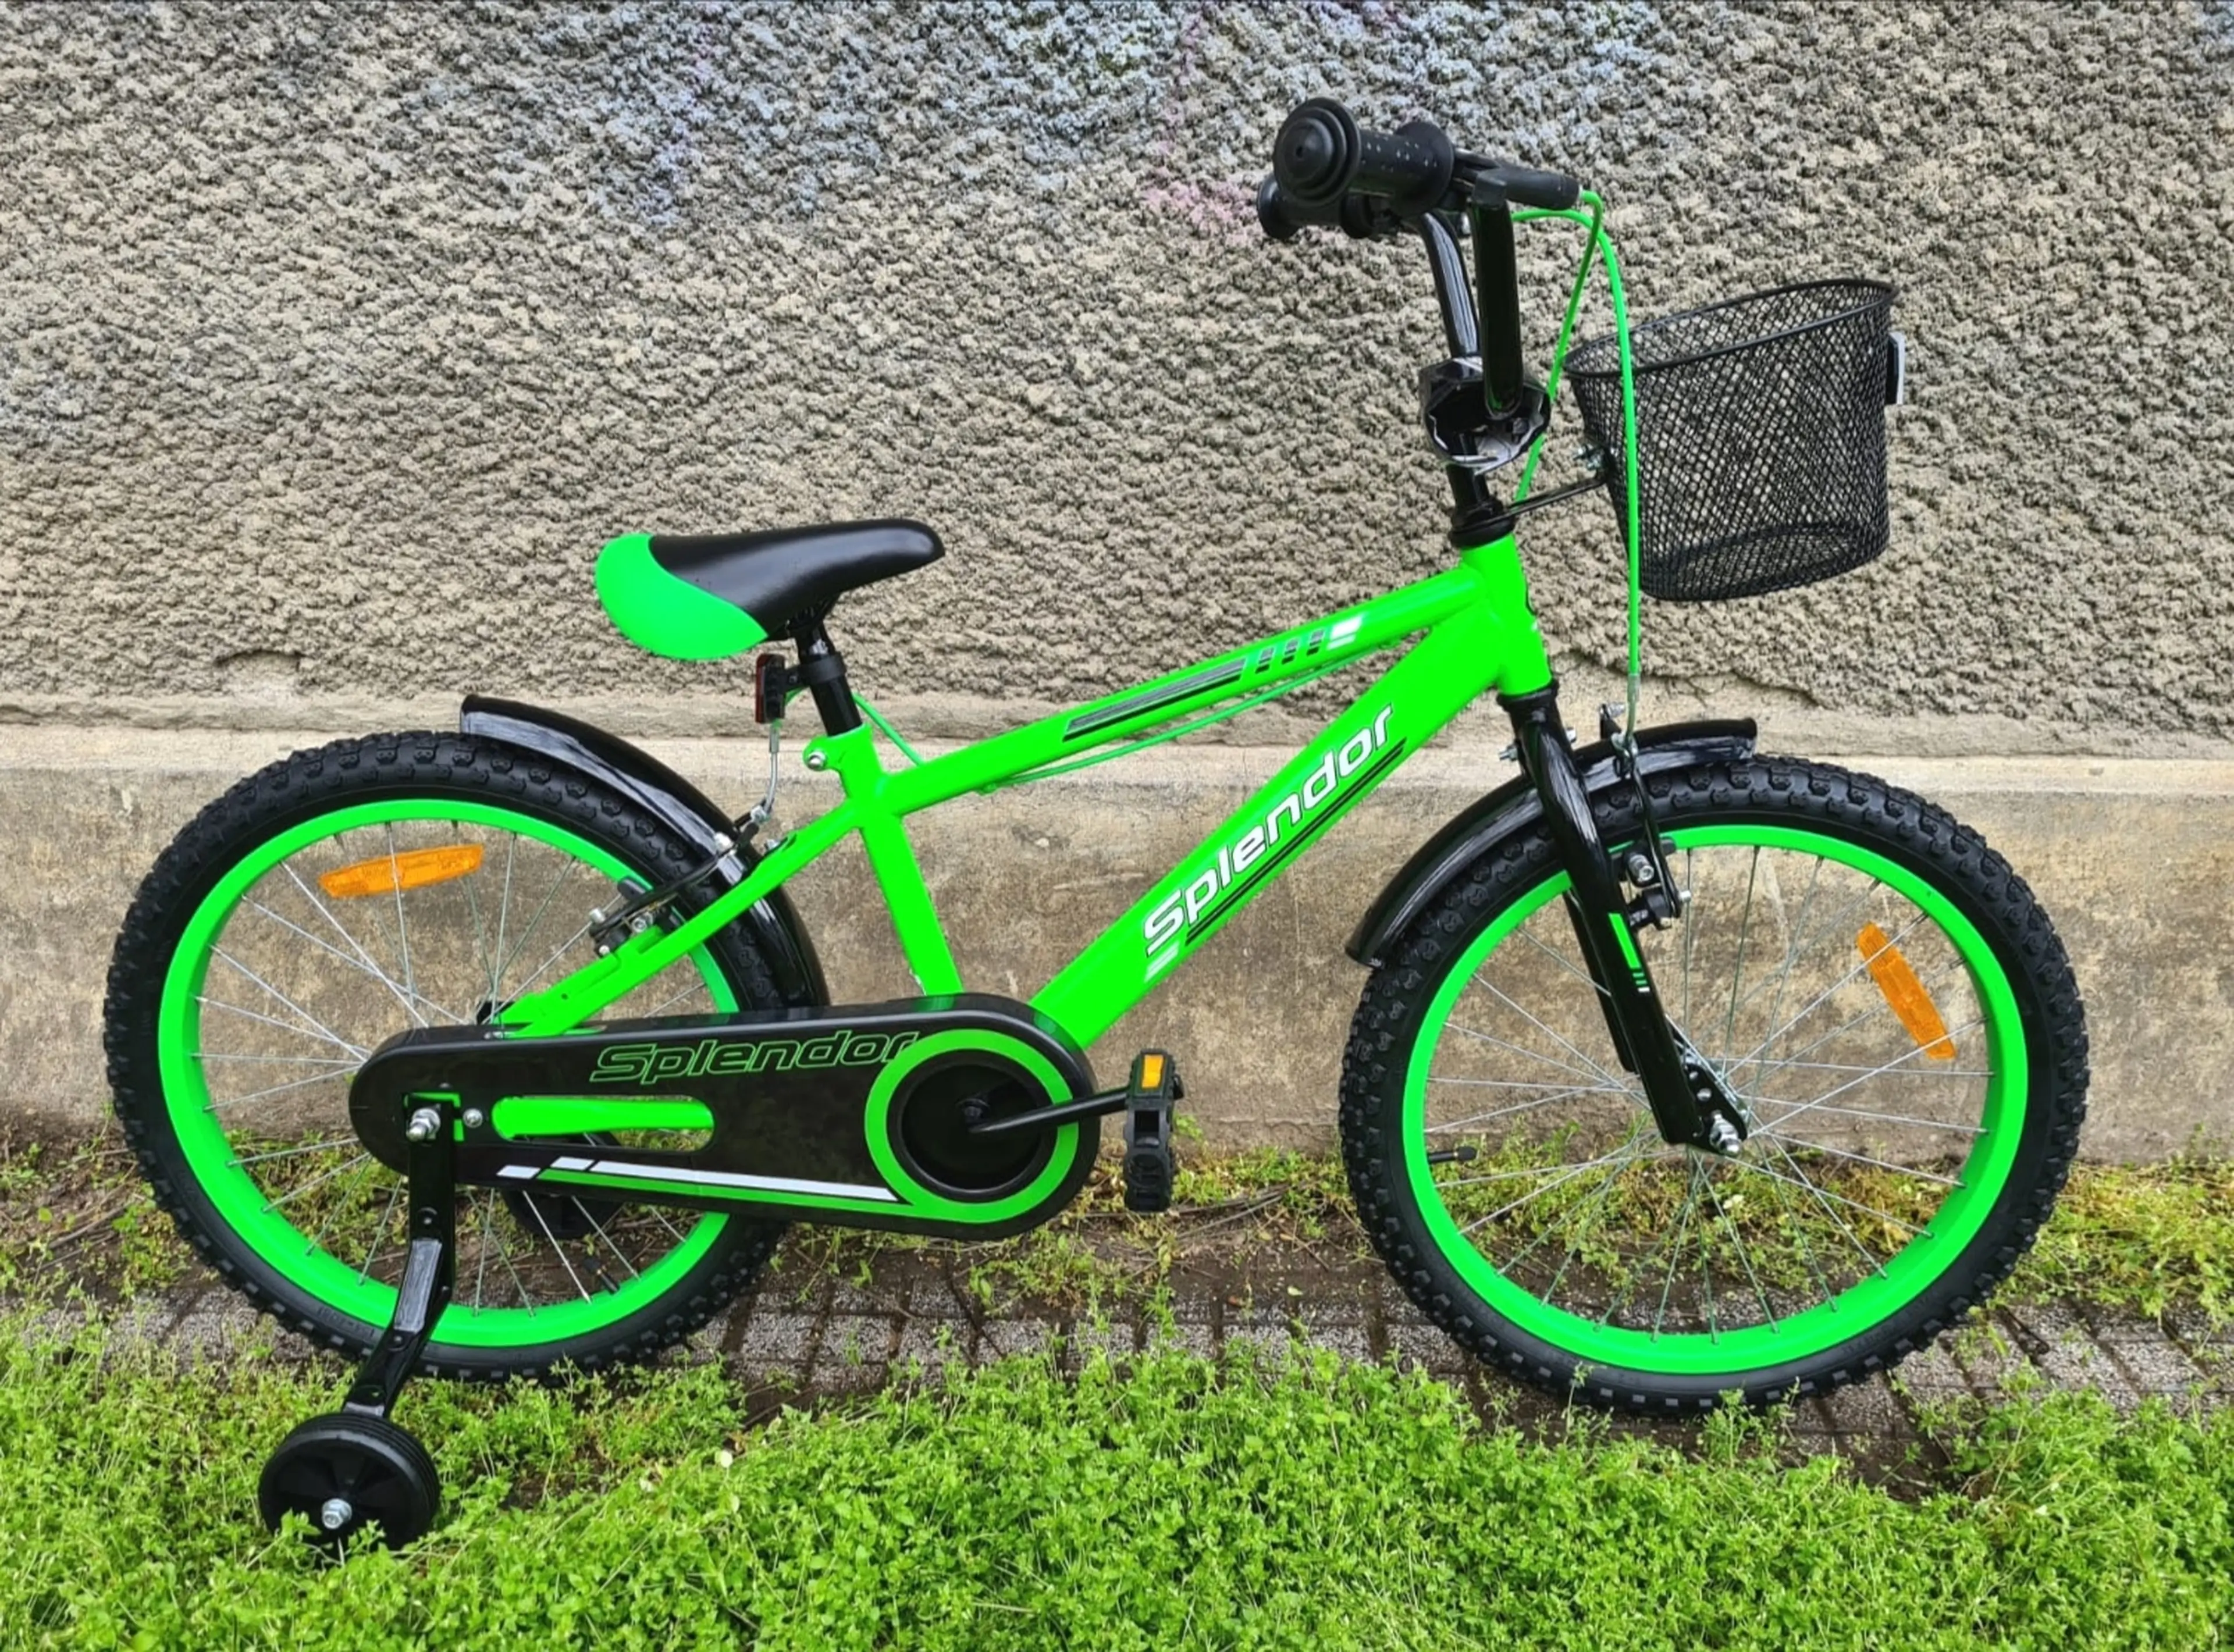 2. Bicicleta Splendor 20 inch pentru copii